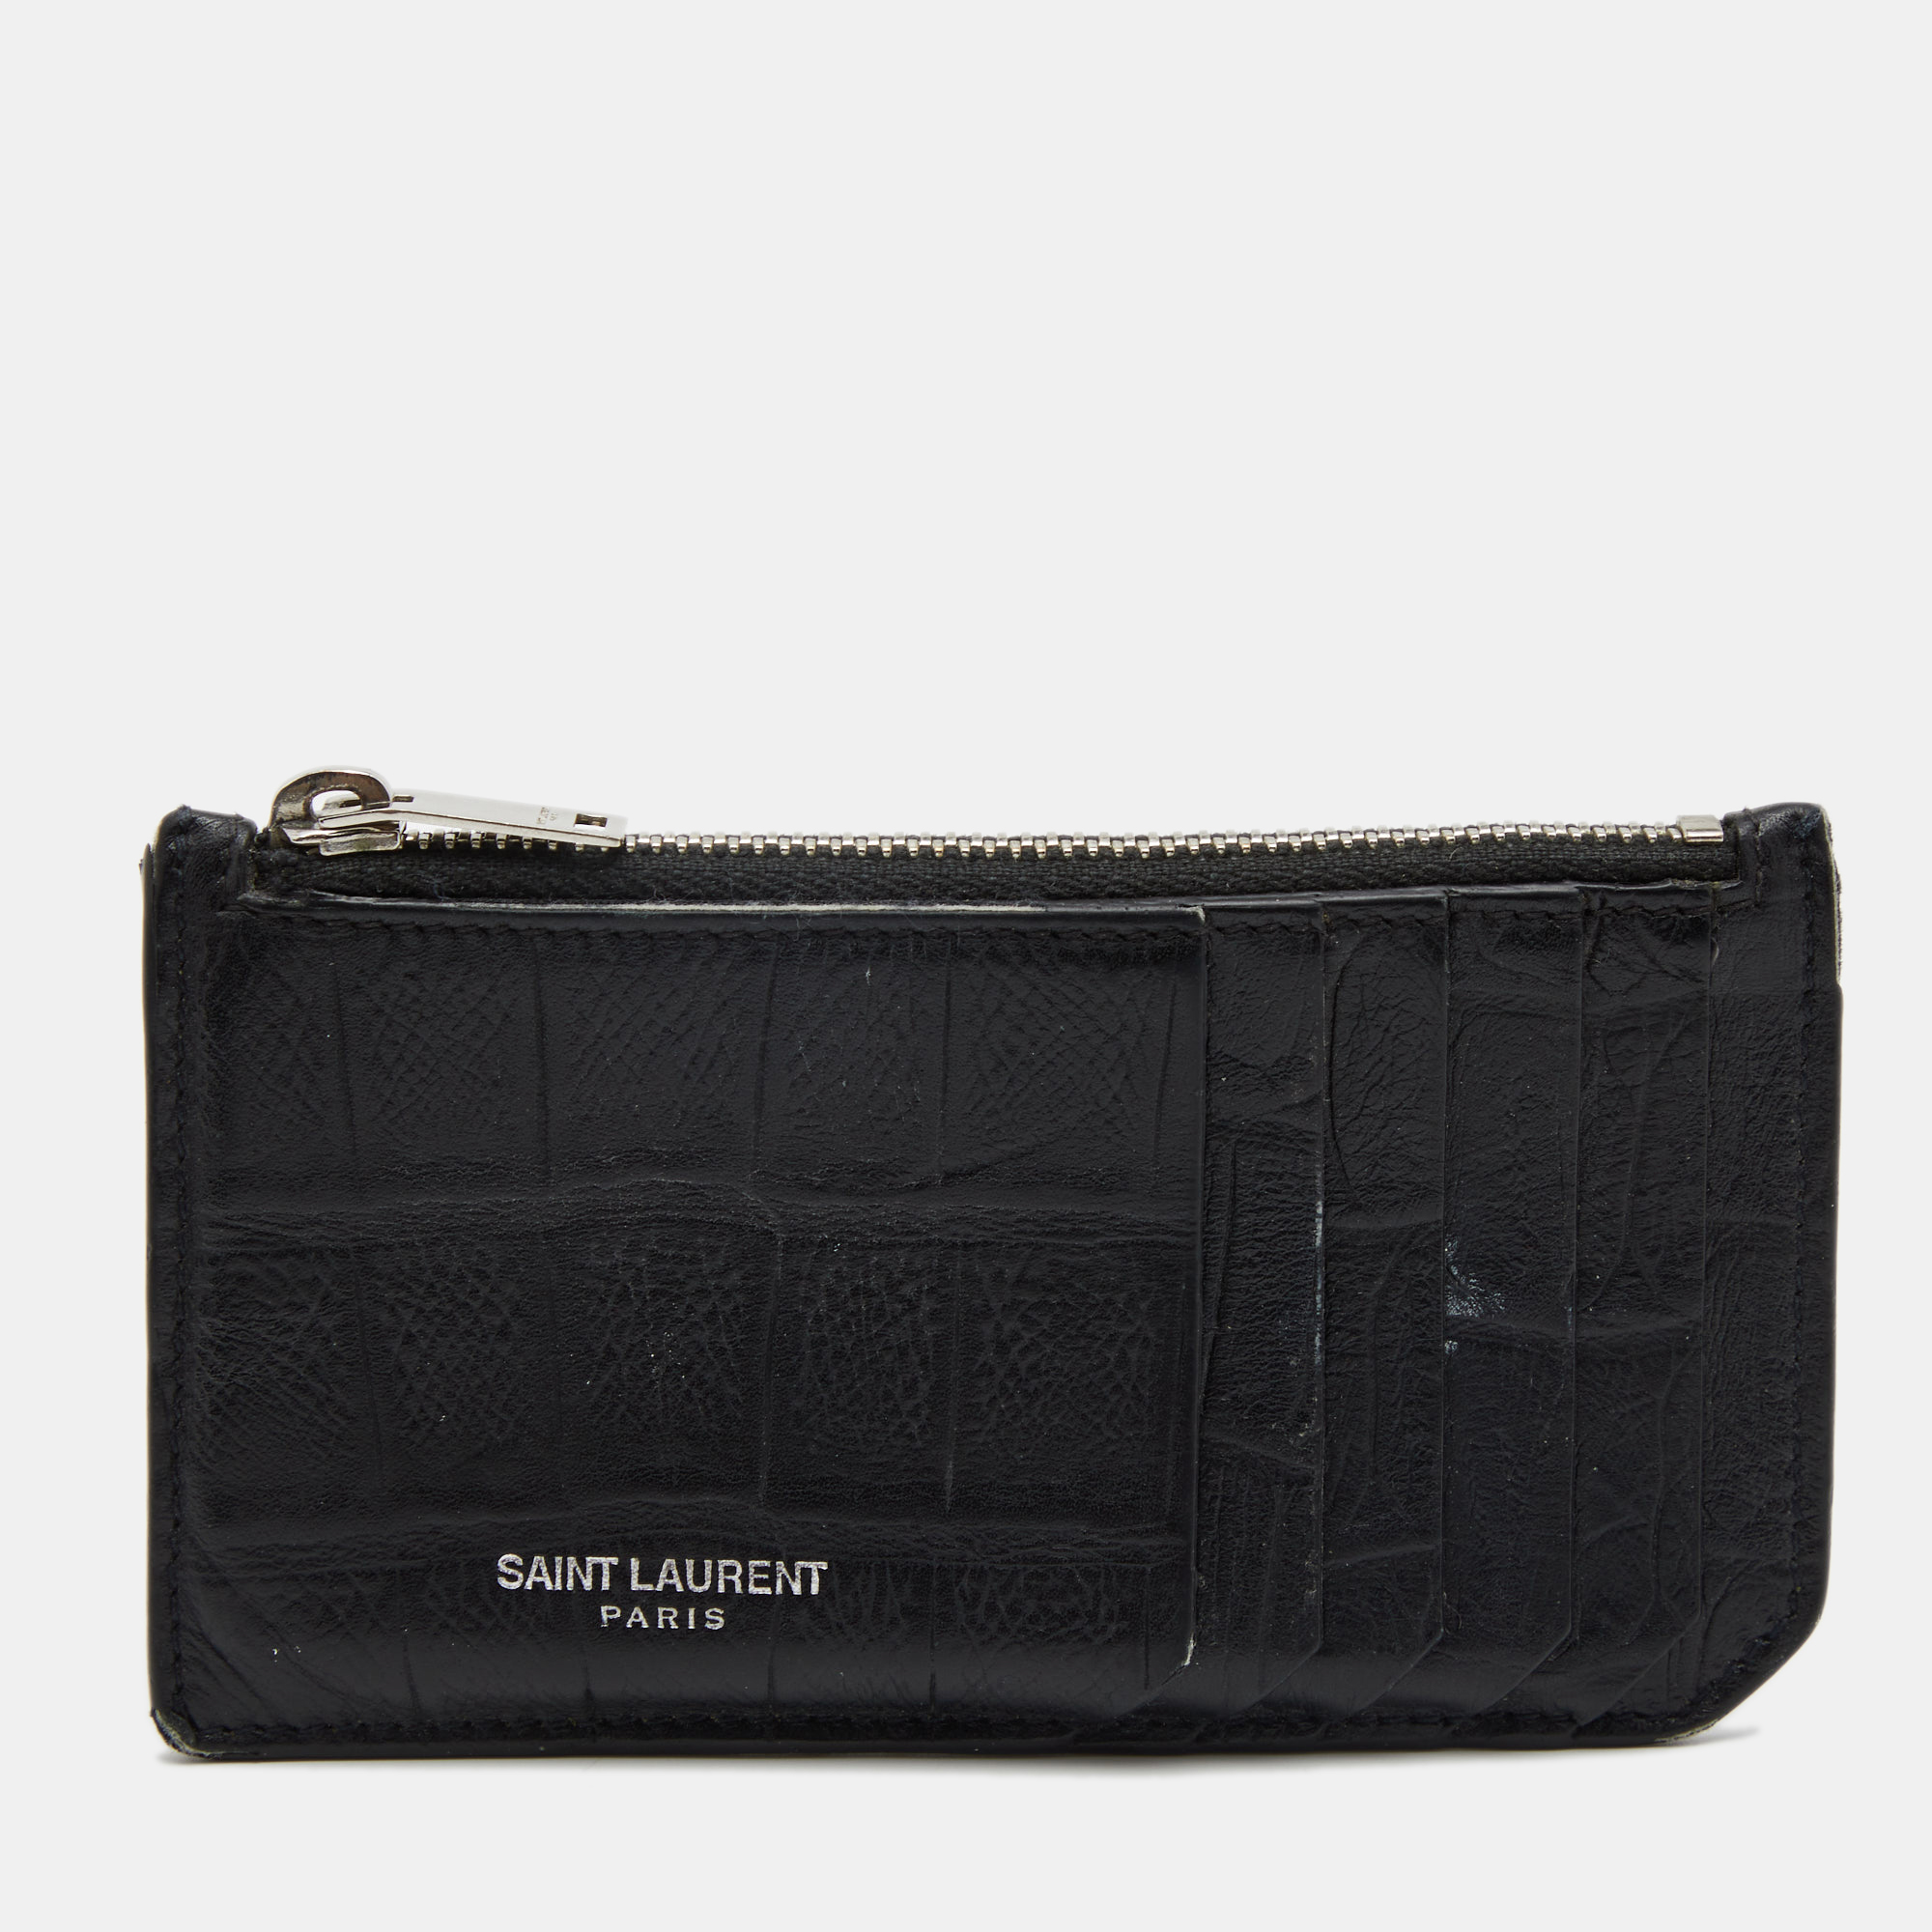 Saint Laurent Black Croc Embossed Leather Card Holder